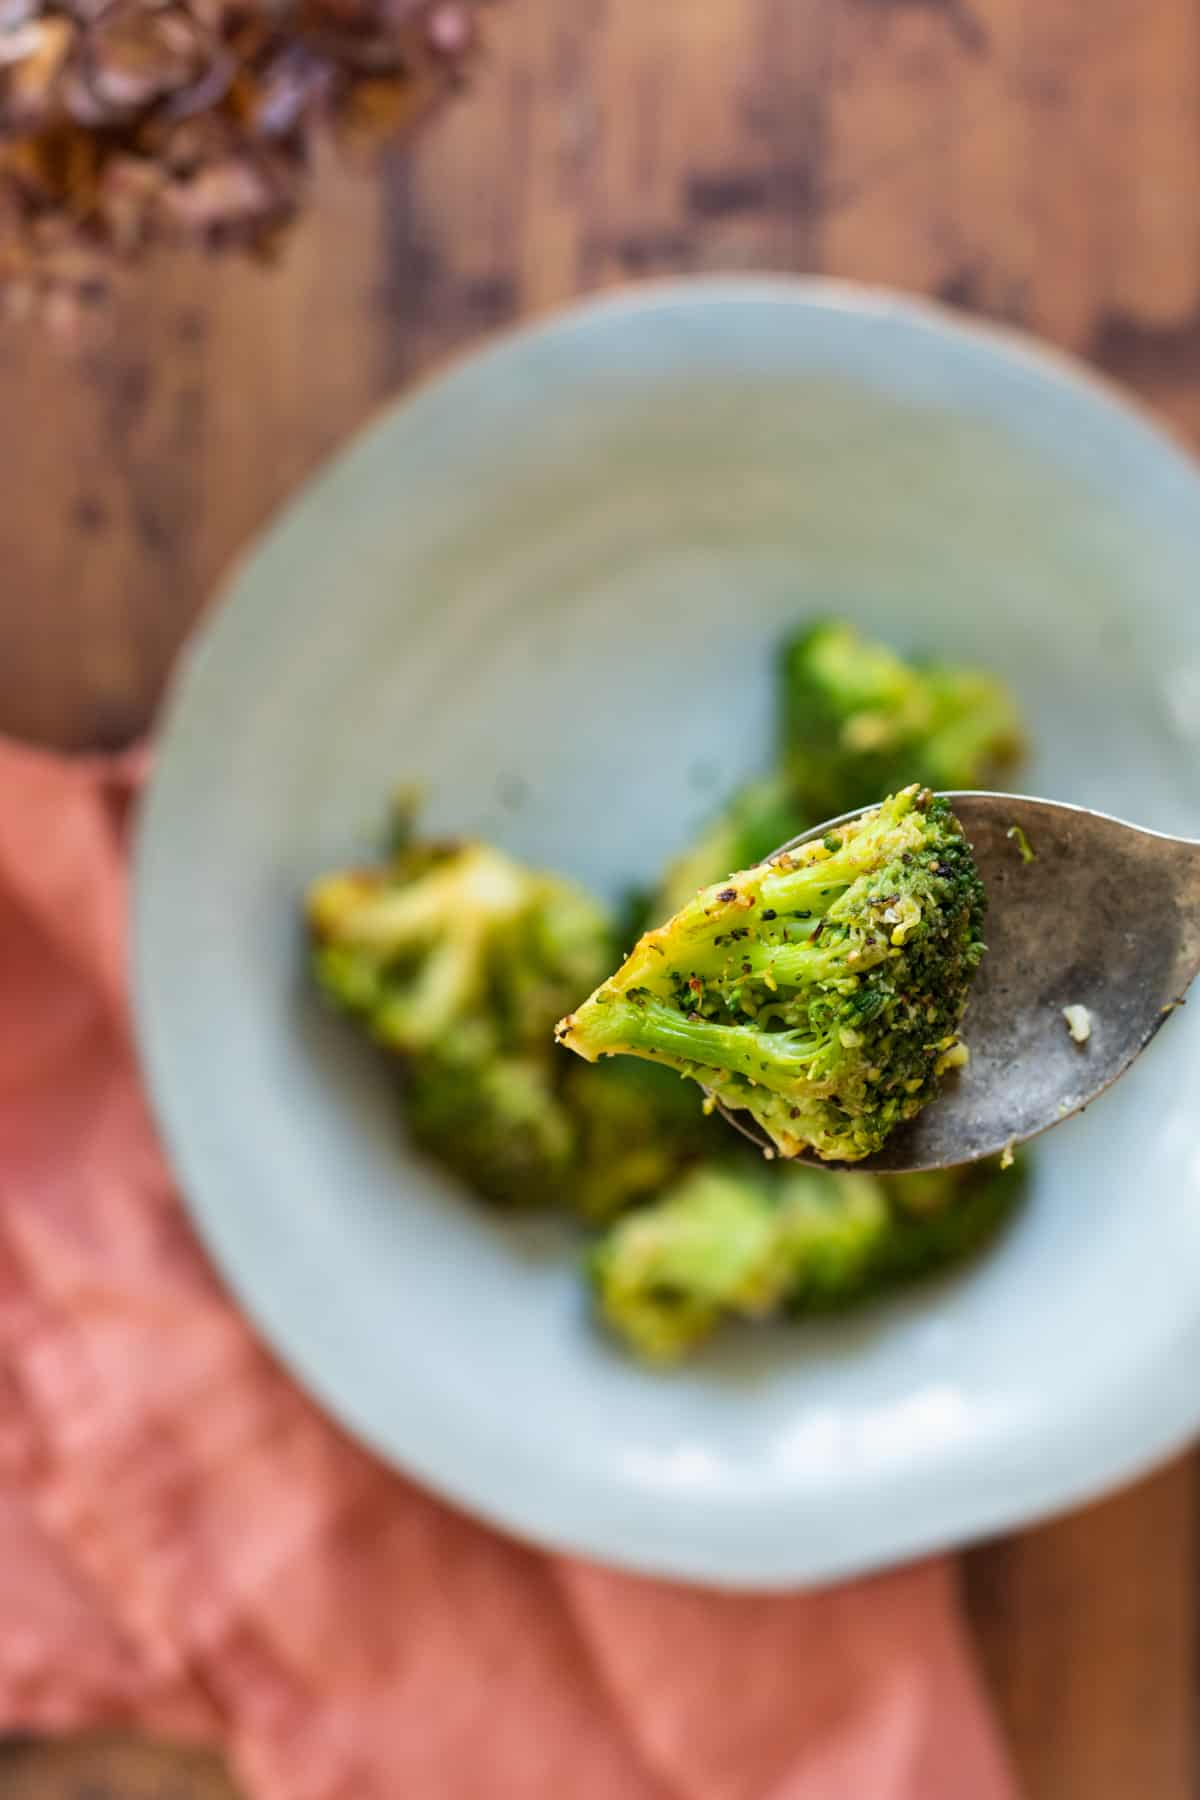 a piece of broccoli on a fork.